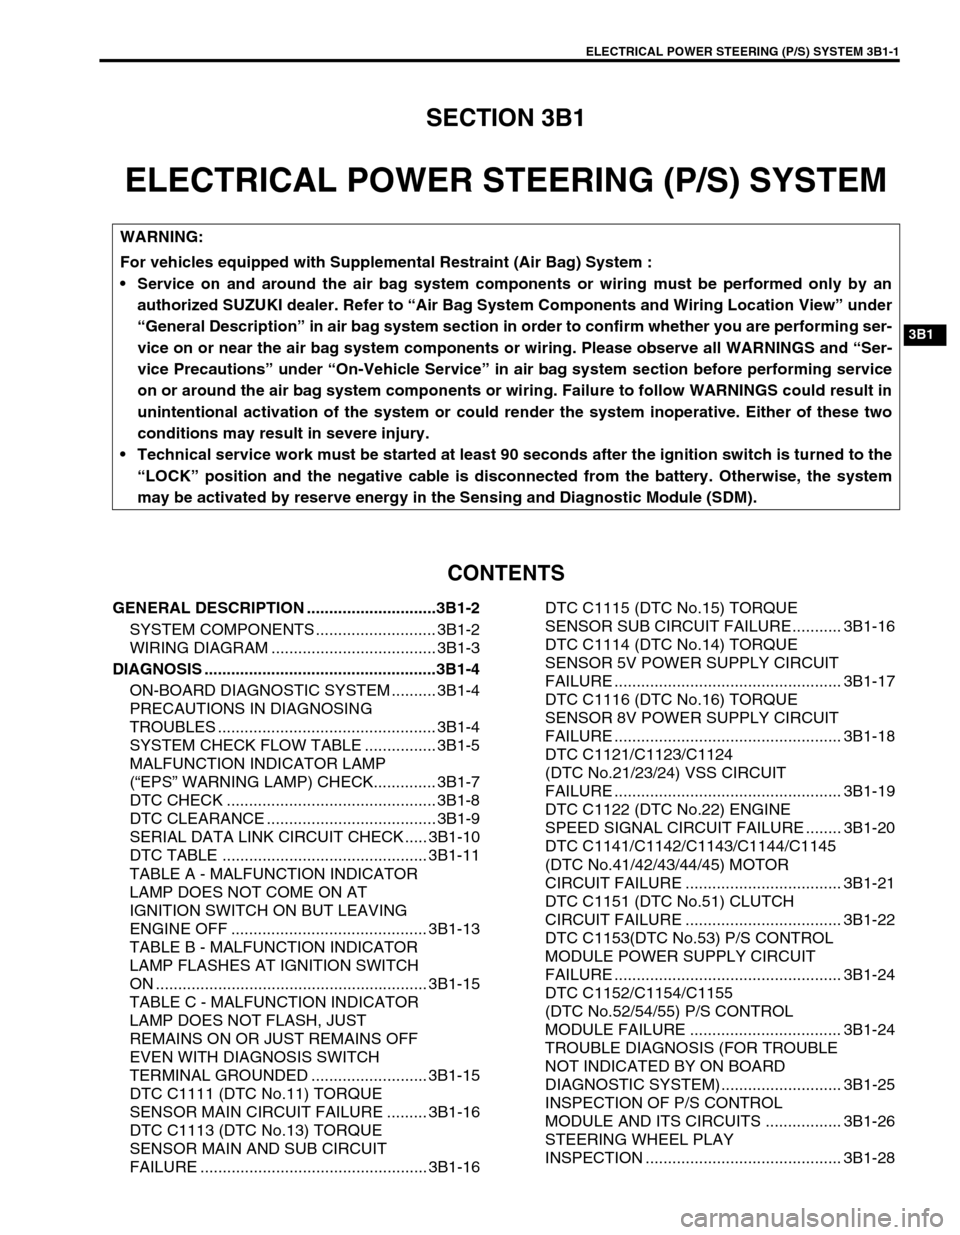 SUZUKI SWIFT 2000 1.G RG413 Service Workshop Manual ELECTRICAL POWER STEERING (P/S) SYSTEM 3B1-1
6F1
6F2
6G
6H
6K
7A
7A1
3B1
7D
7E
7F
8A
8B
8C
8D
8E
9
10
10A
10B
SECTION 3B1
ELECTRICAL POWER STEERING (P/S) SYSTEM
CONTENTS
GENERAL DESCRIPTION ..........